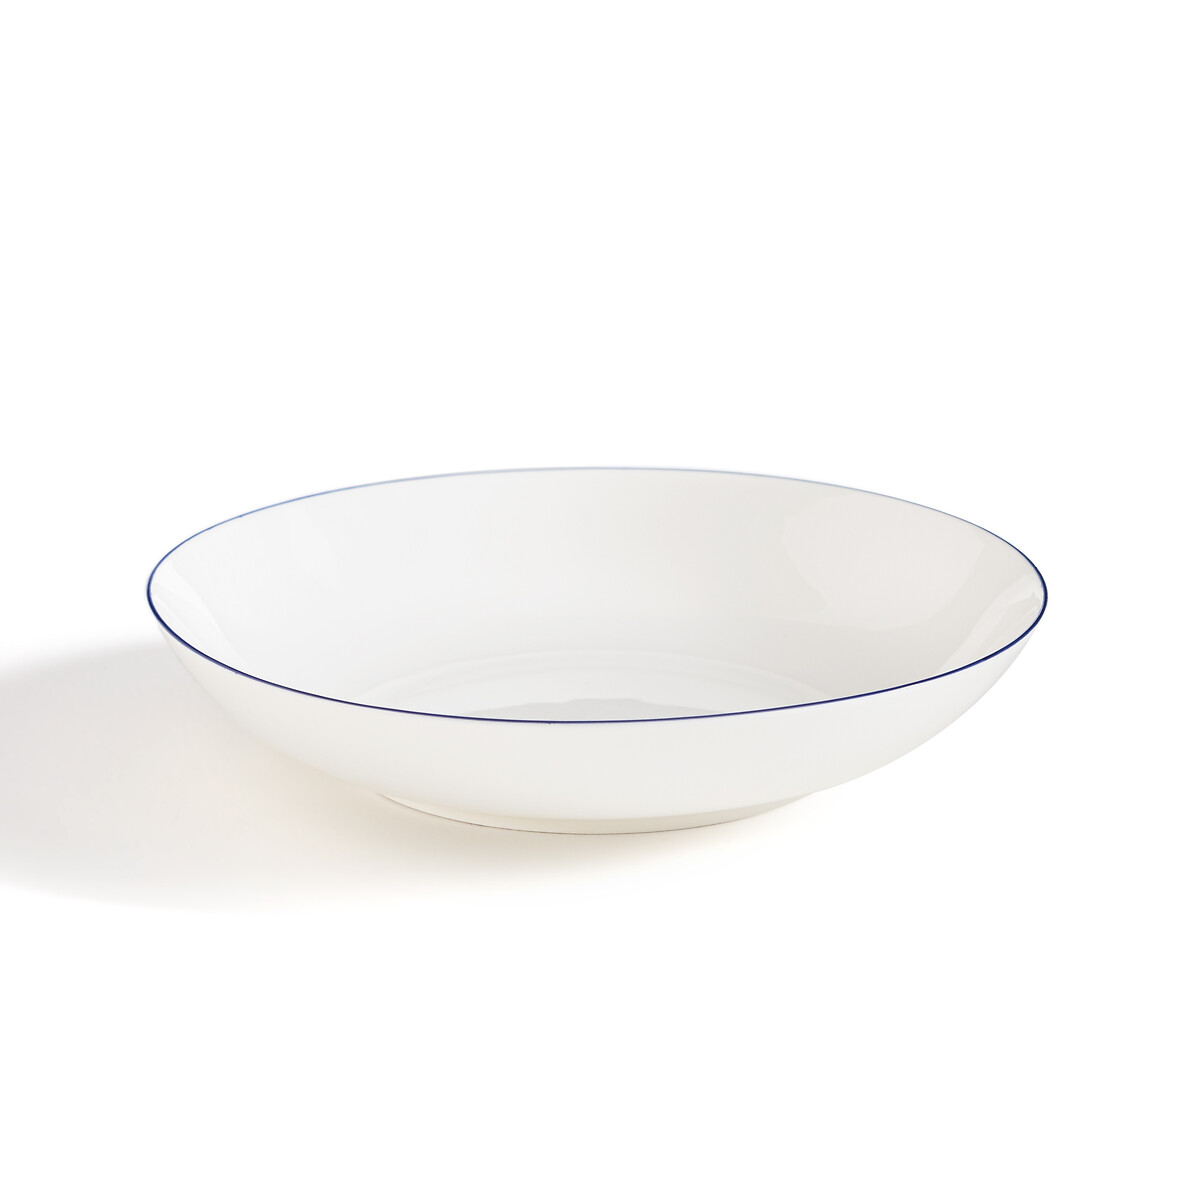 Juego de 4 platos hondos de porcelana, atola blanco La Redoute Interieurs